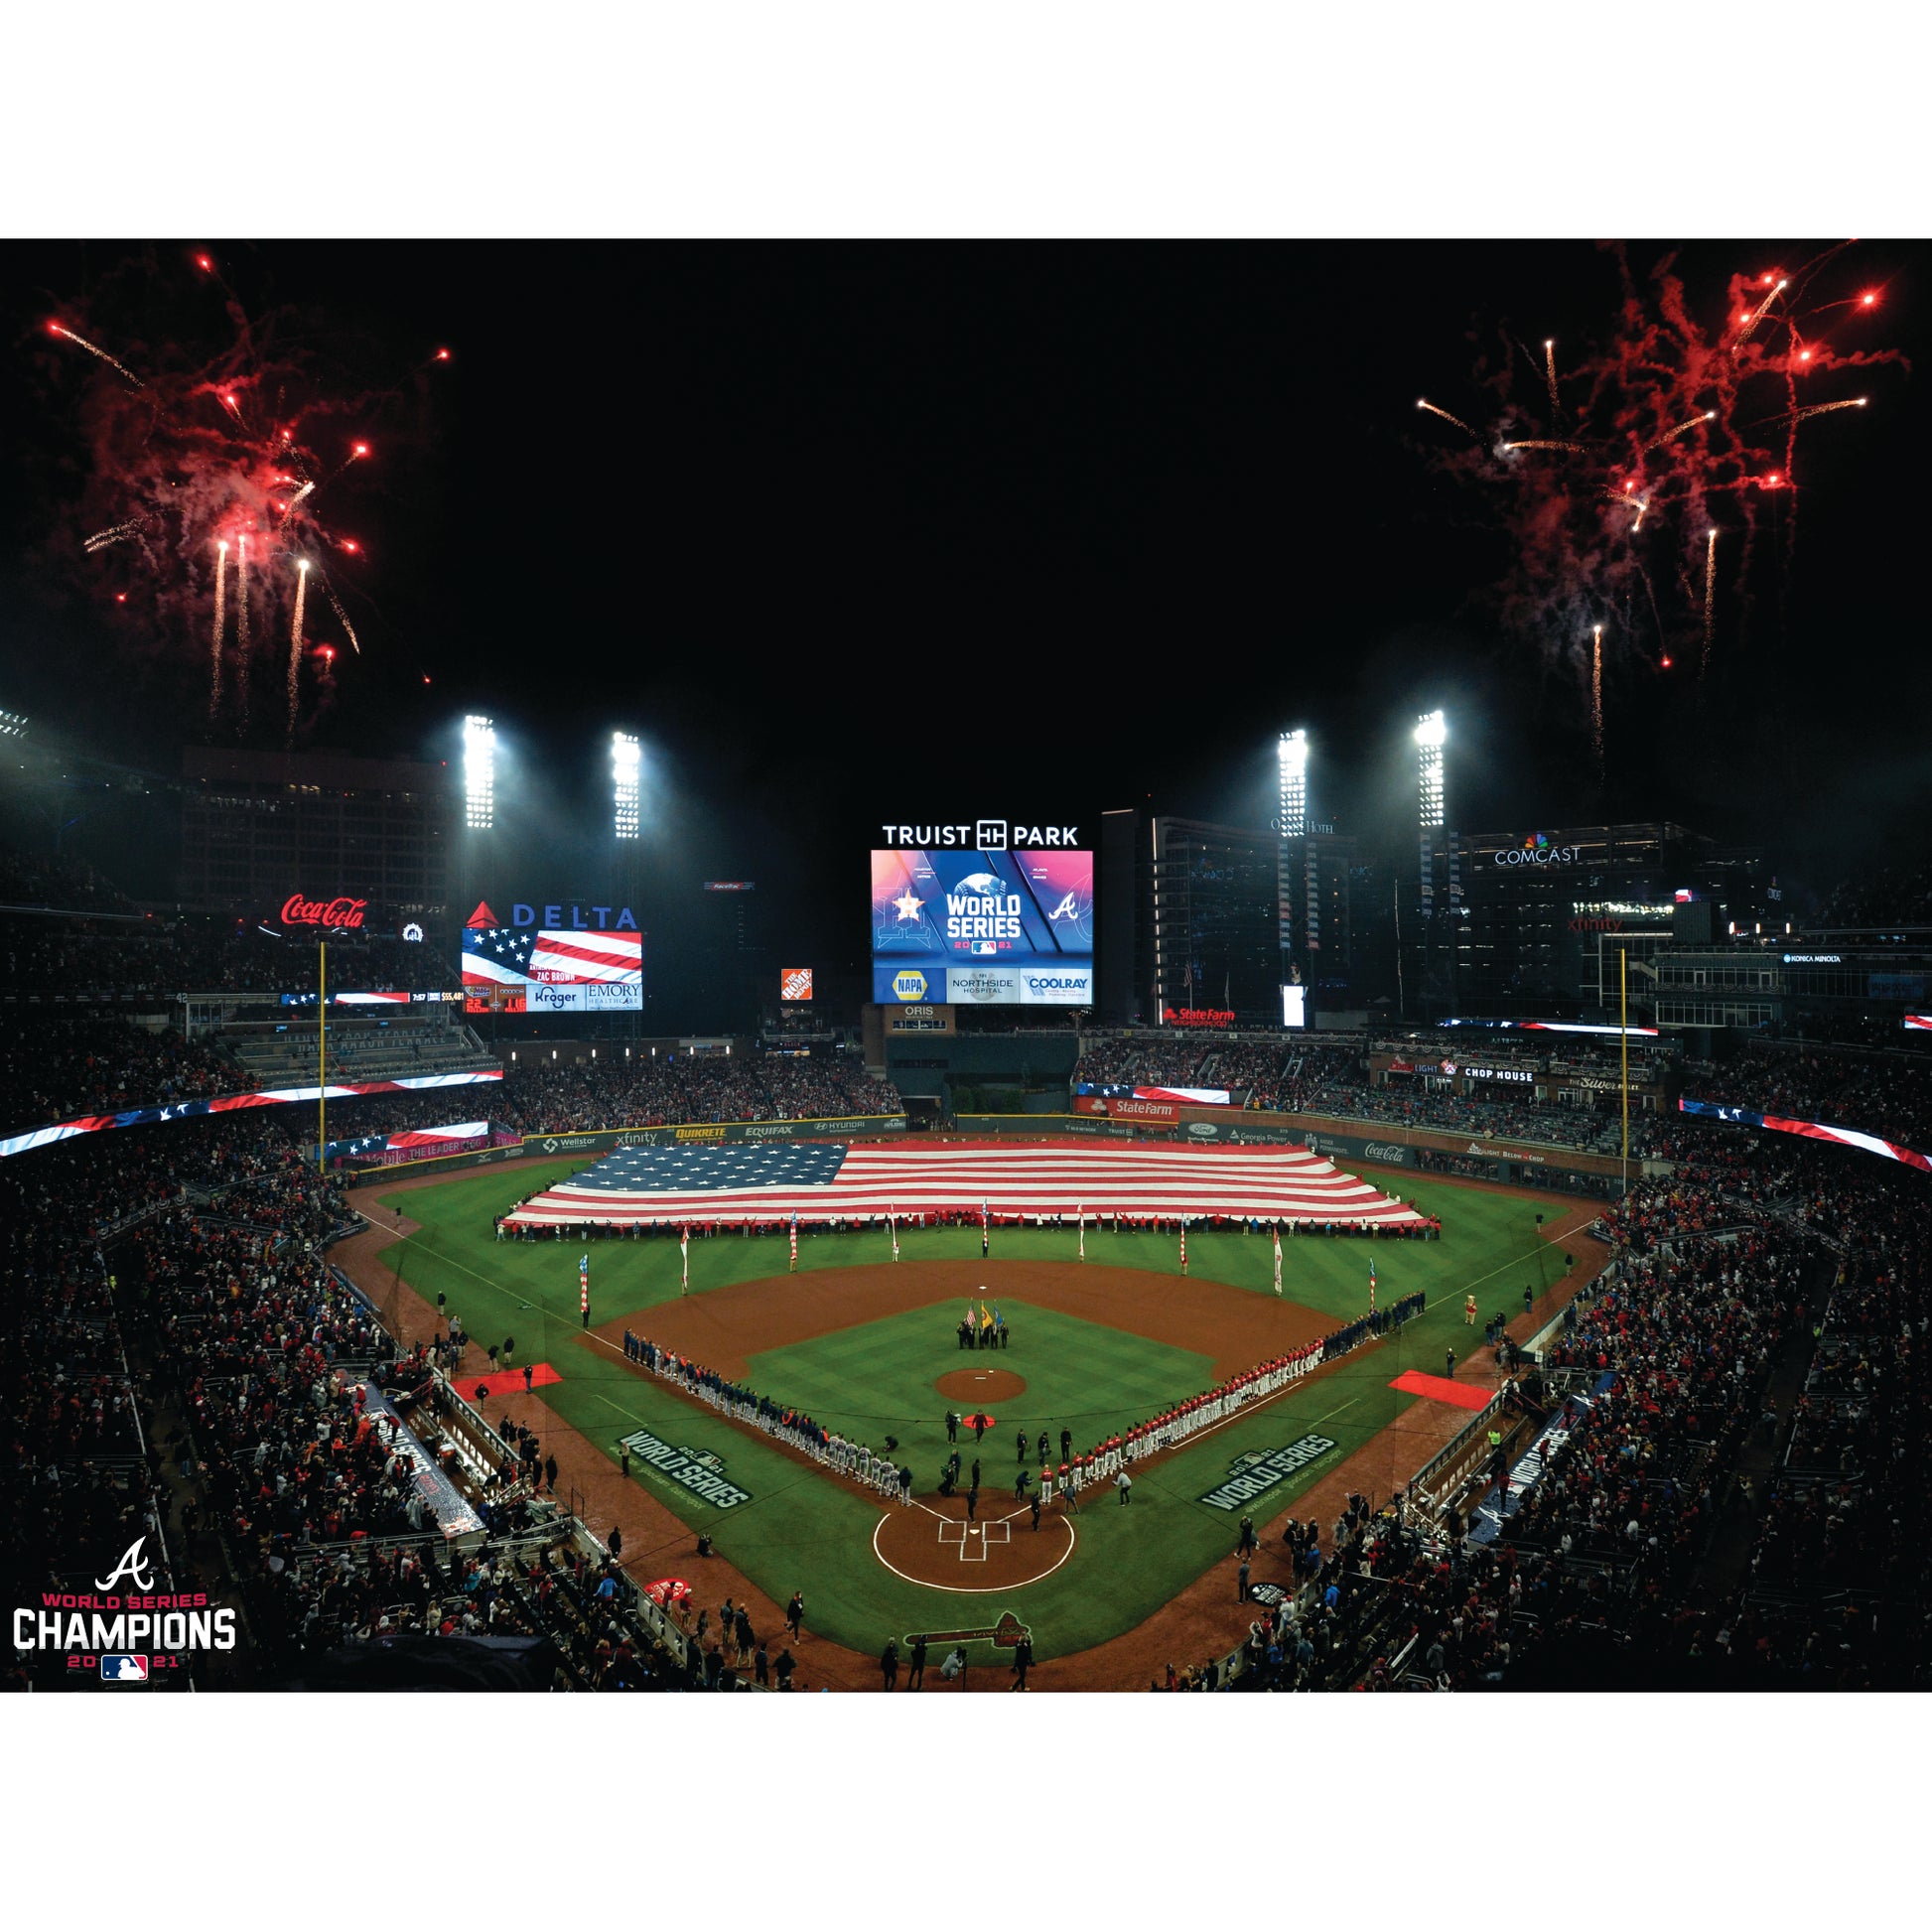 Braves World Series win 'huge' for kids in Atlanta minority communities